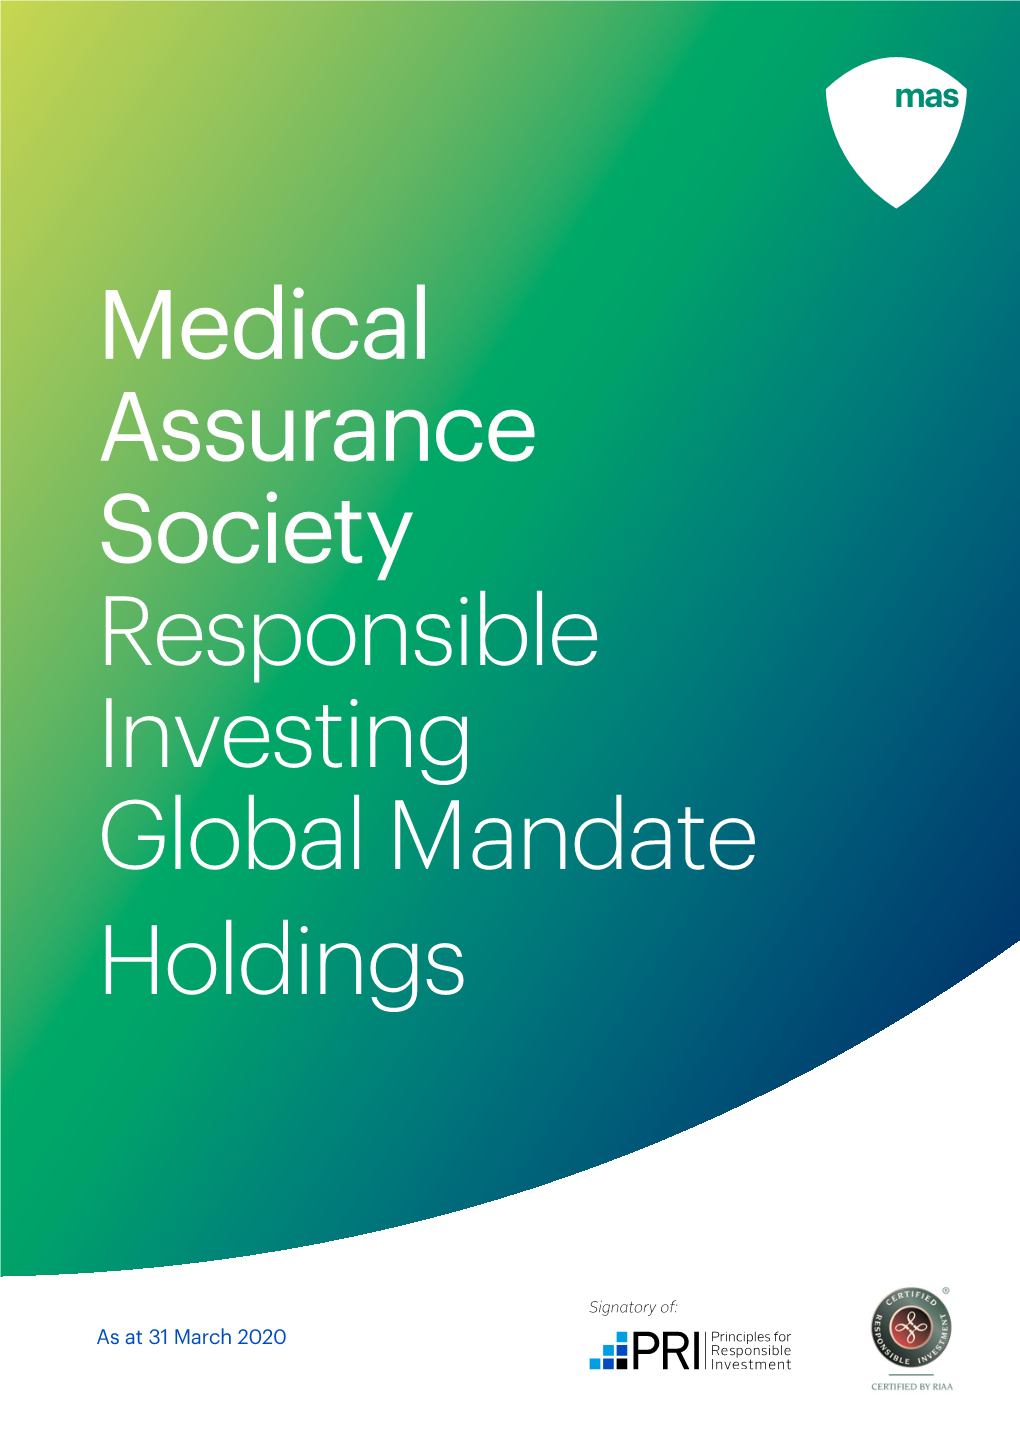 Medical Assurance Society Responsible Investing Global Mandate Holdings